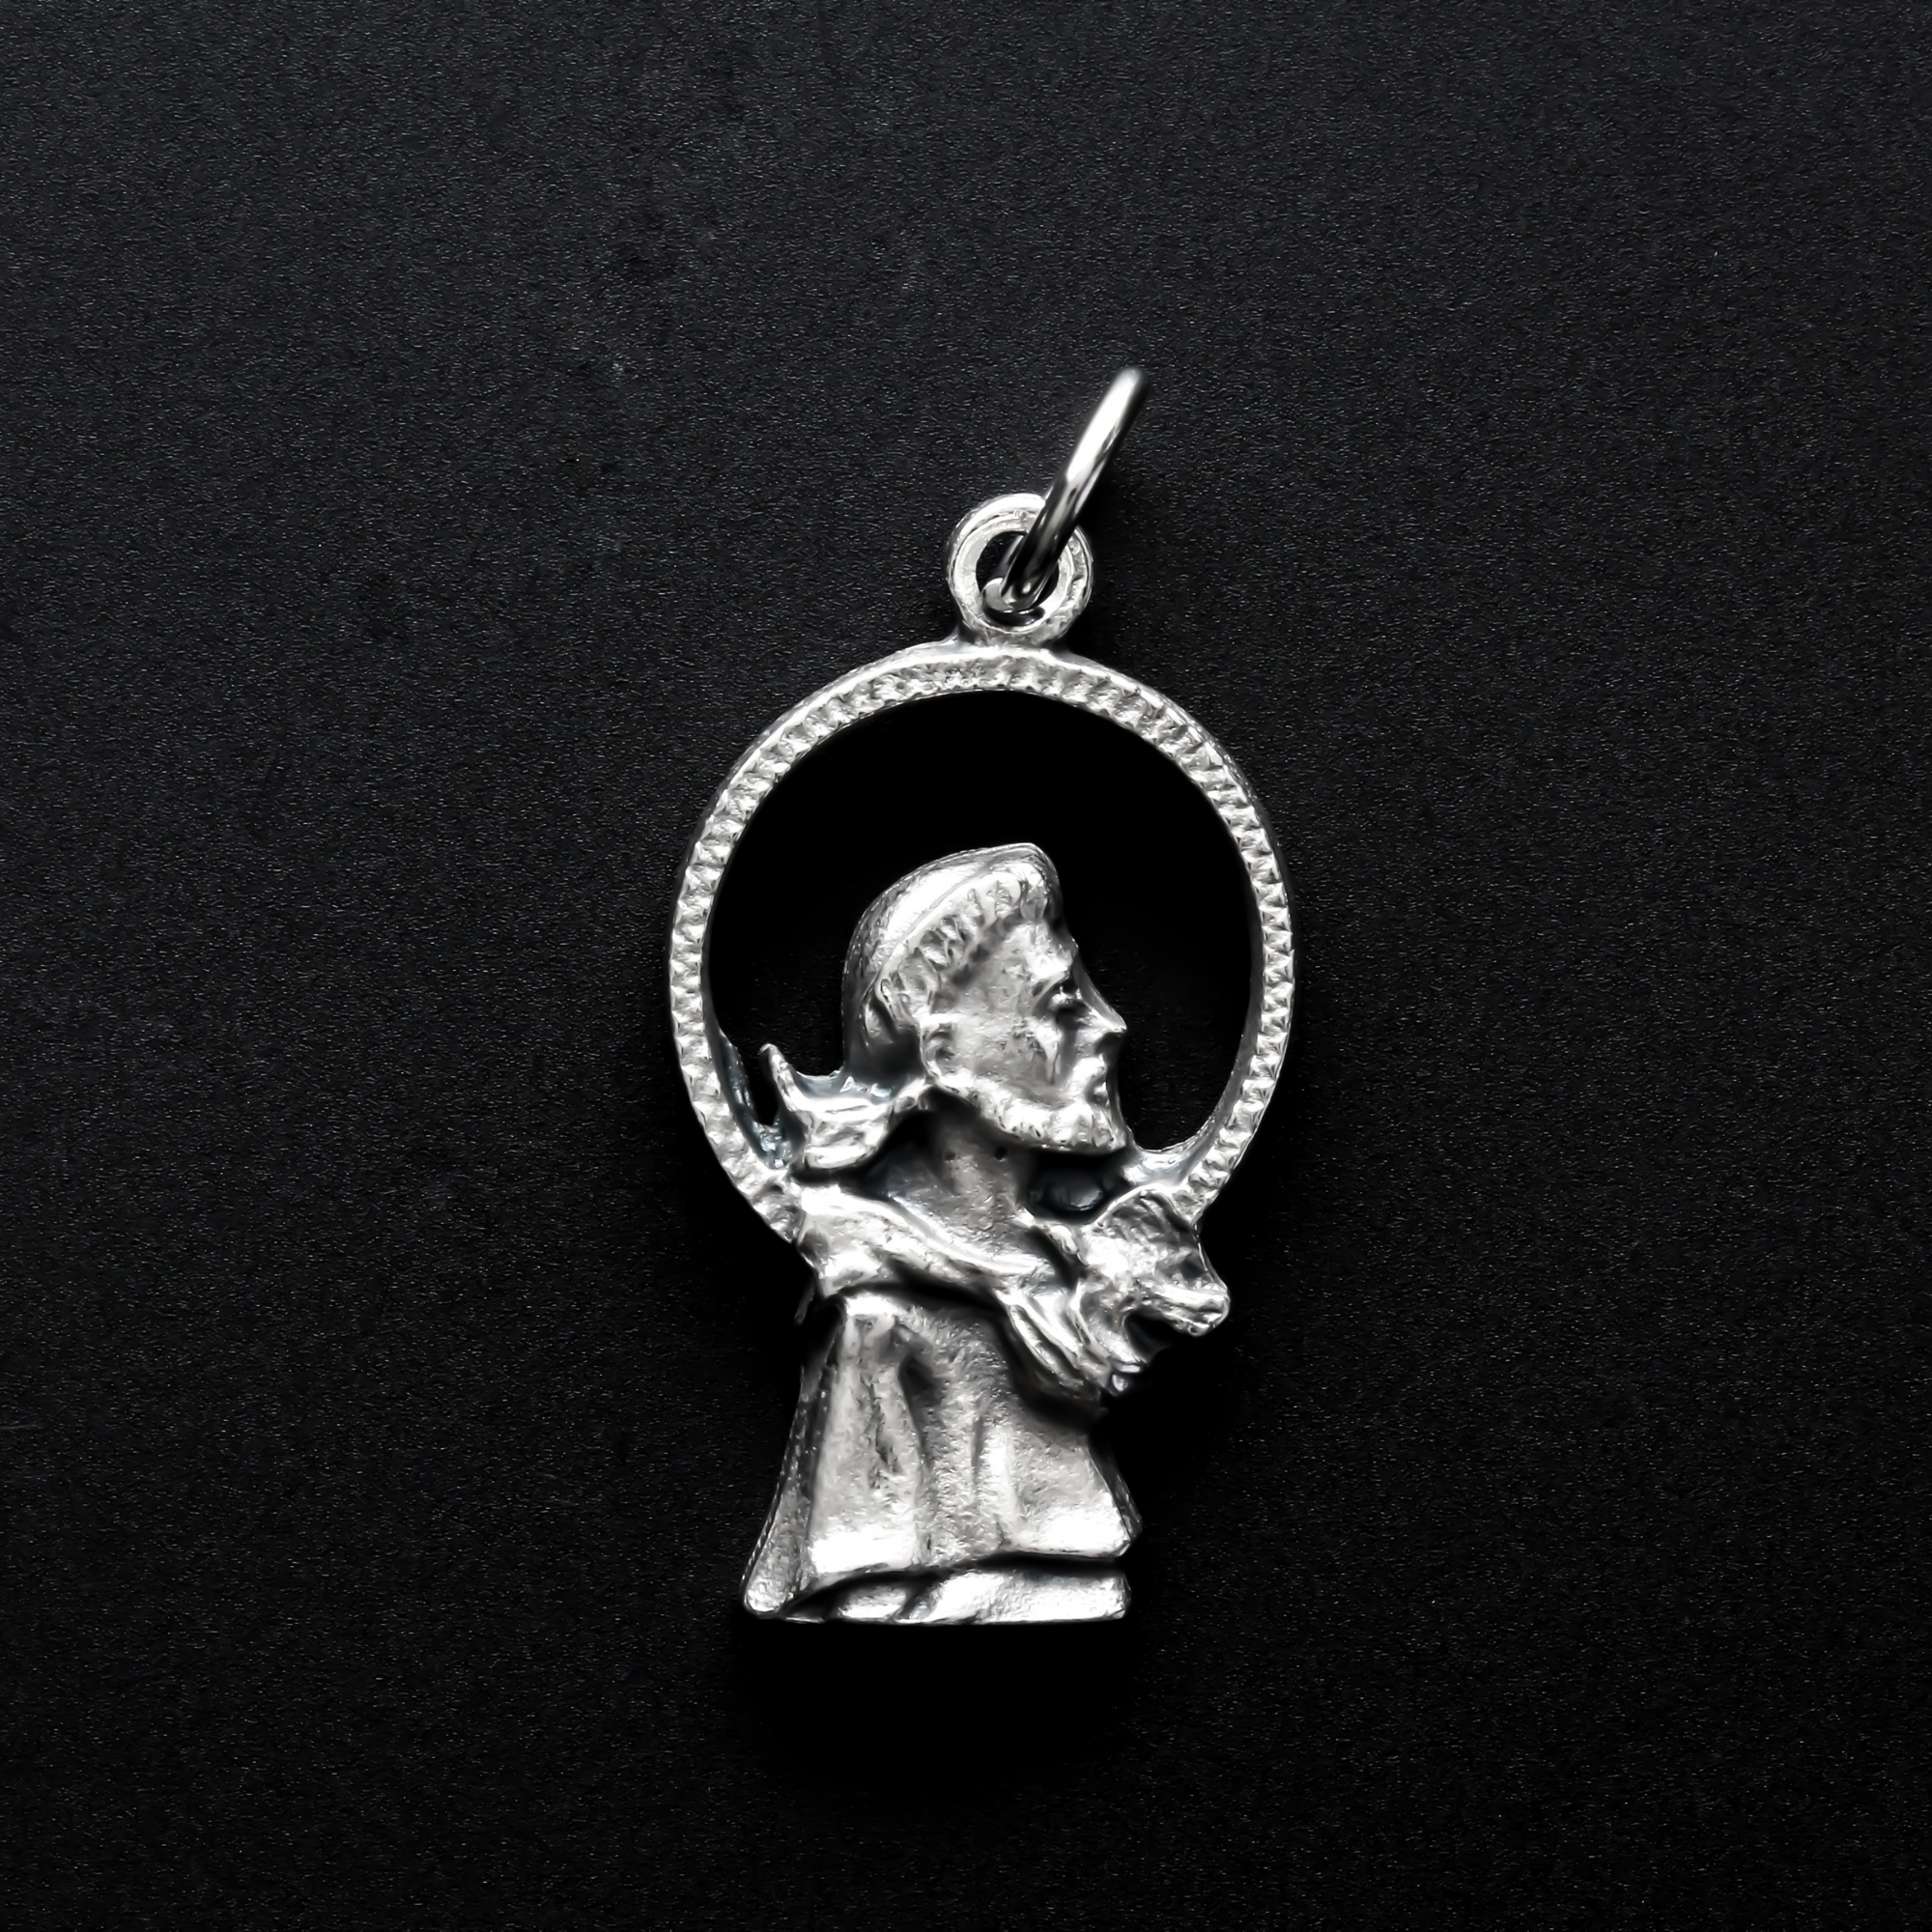 Saint Francis of Assisi silhouette pendant